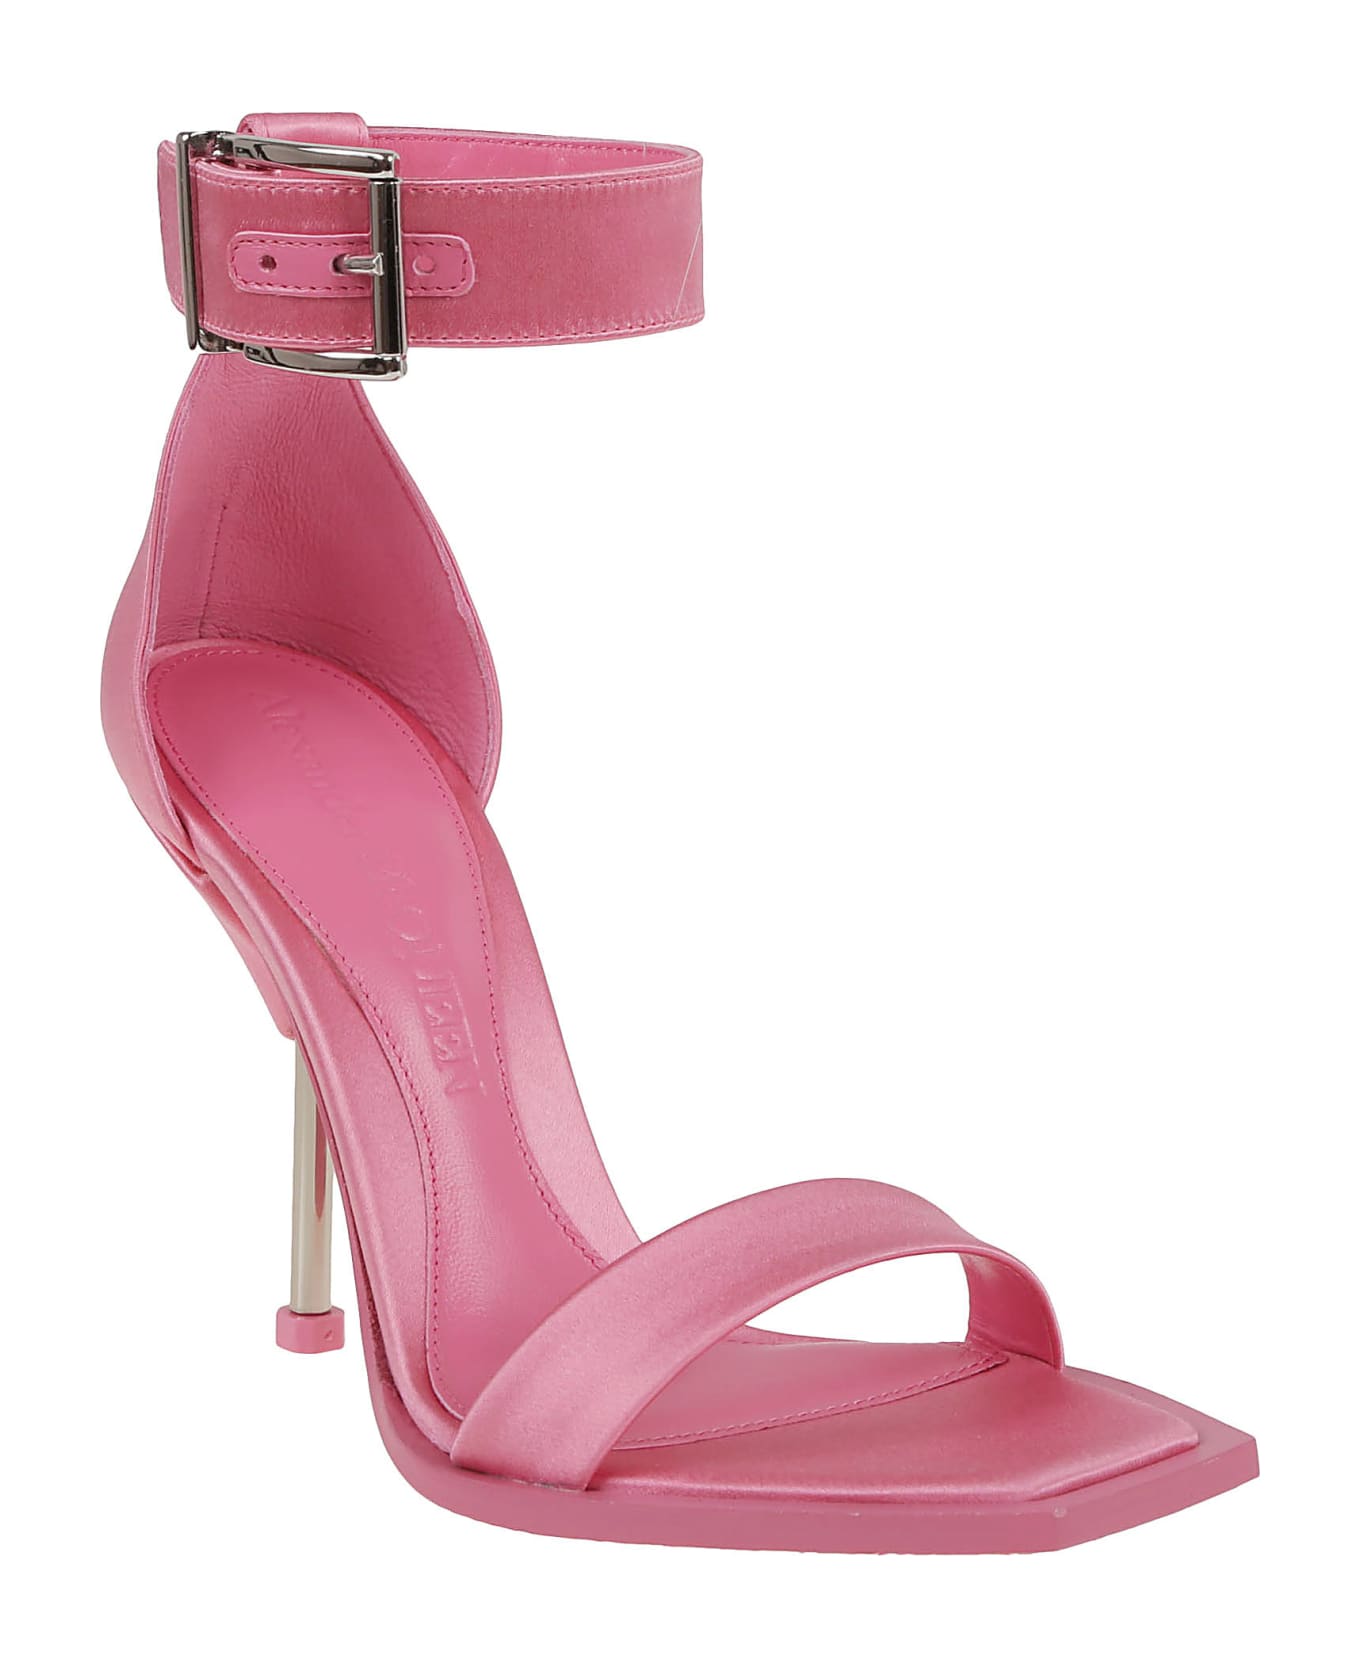 Alexander McQueen Ankle Strap Sandals - Sugar Pink Silver サンダル